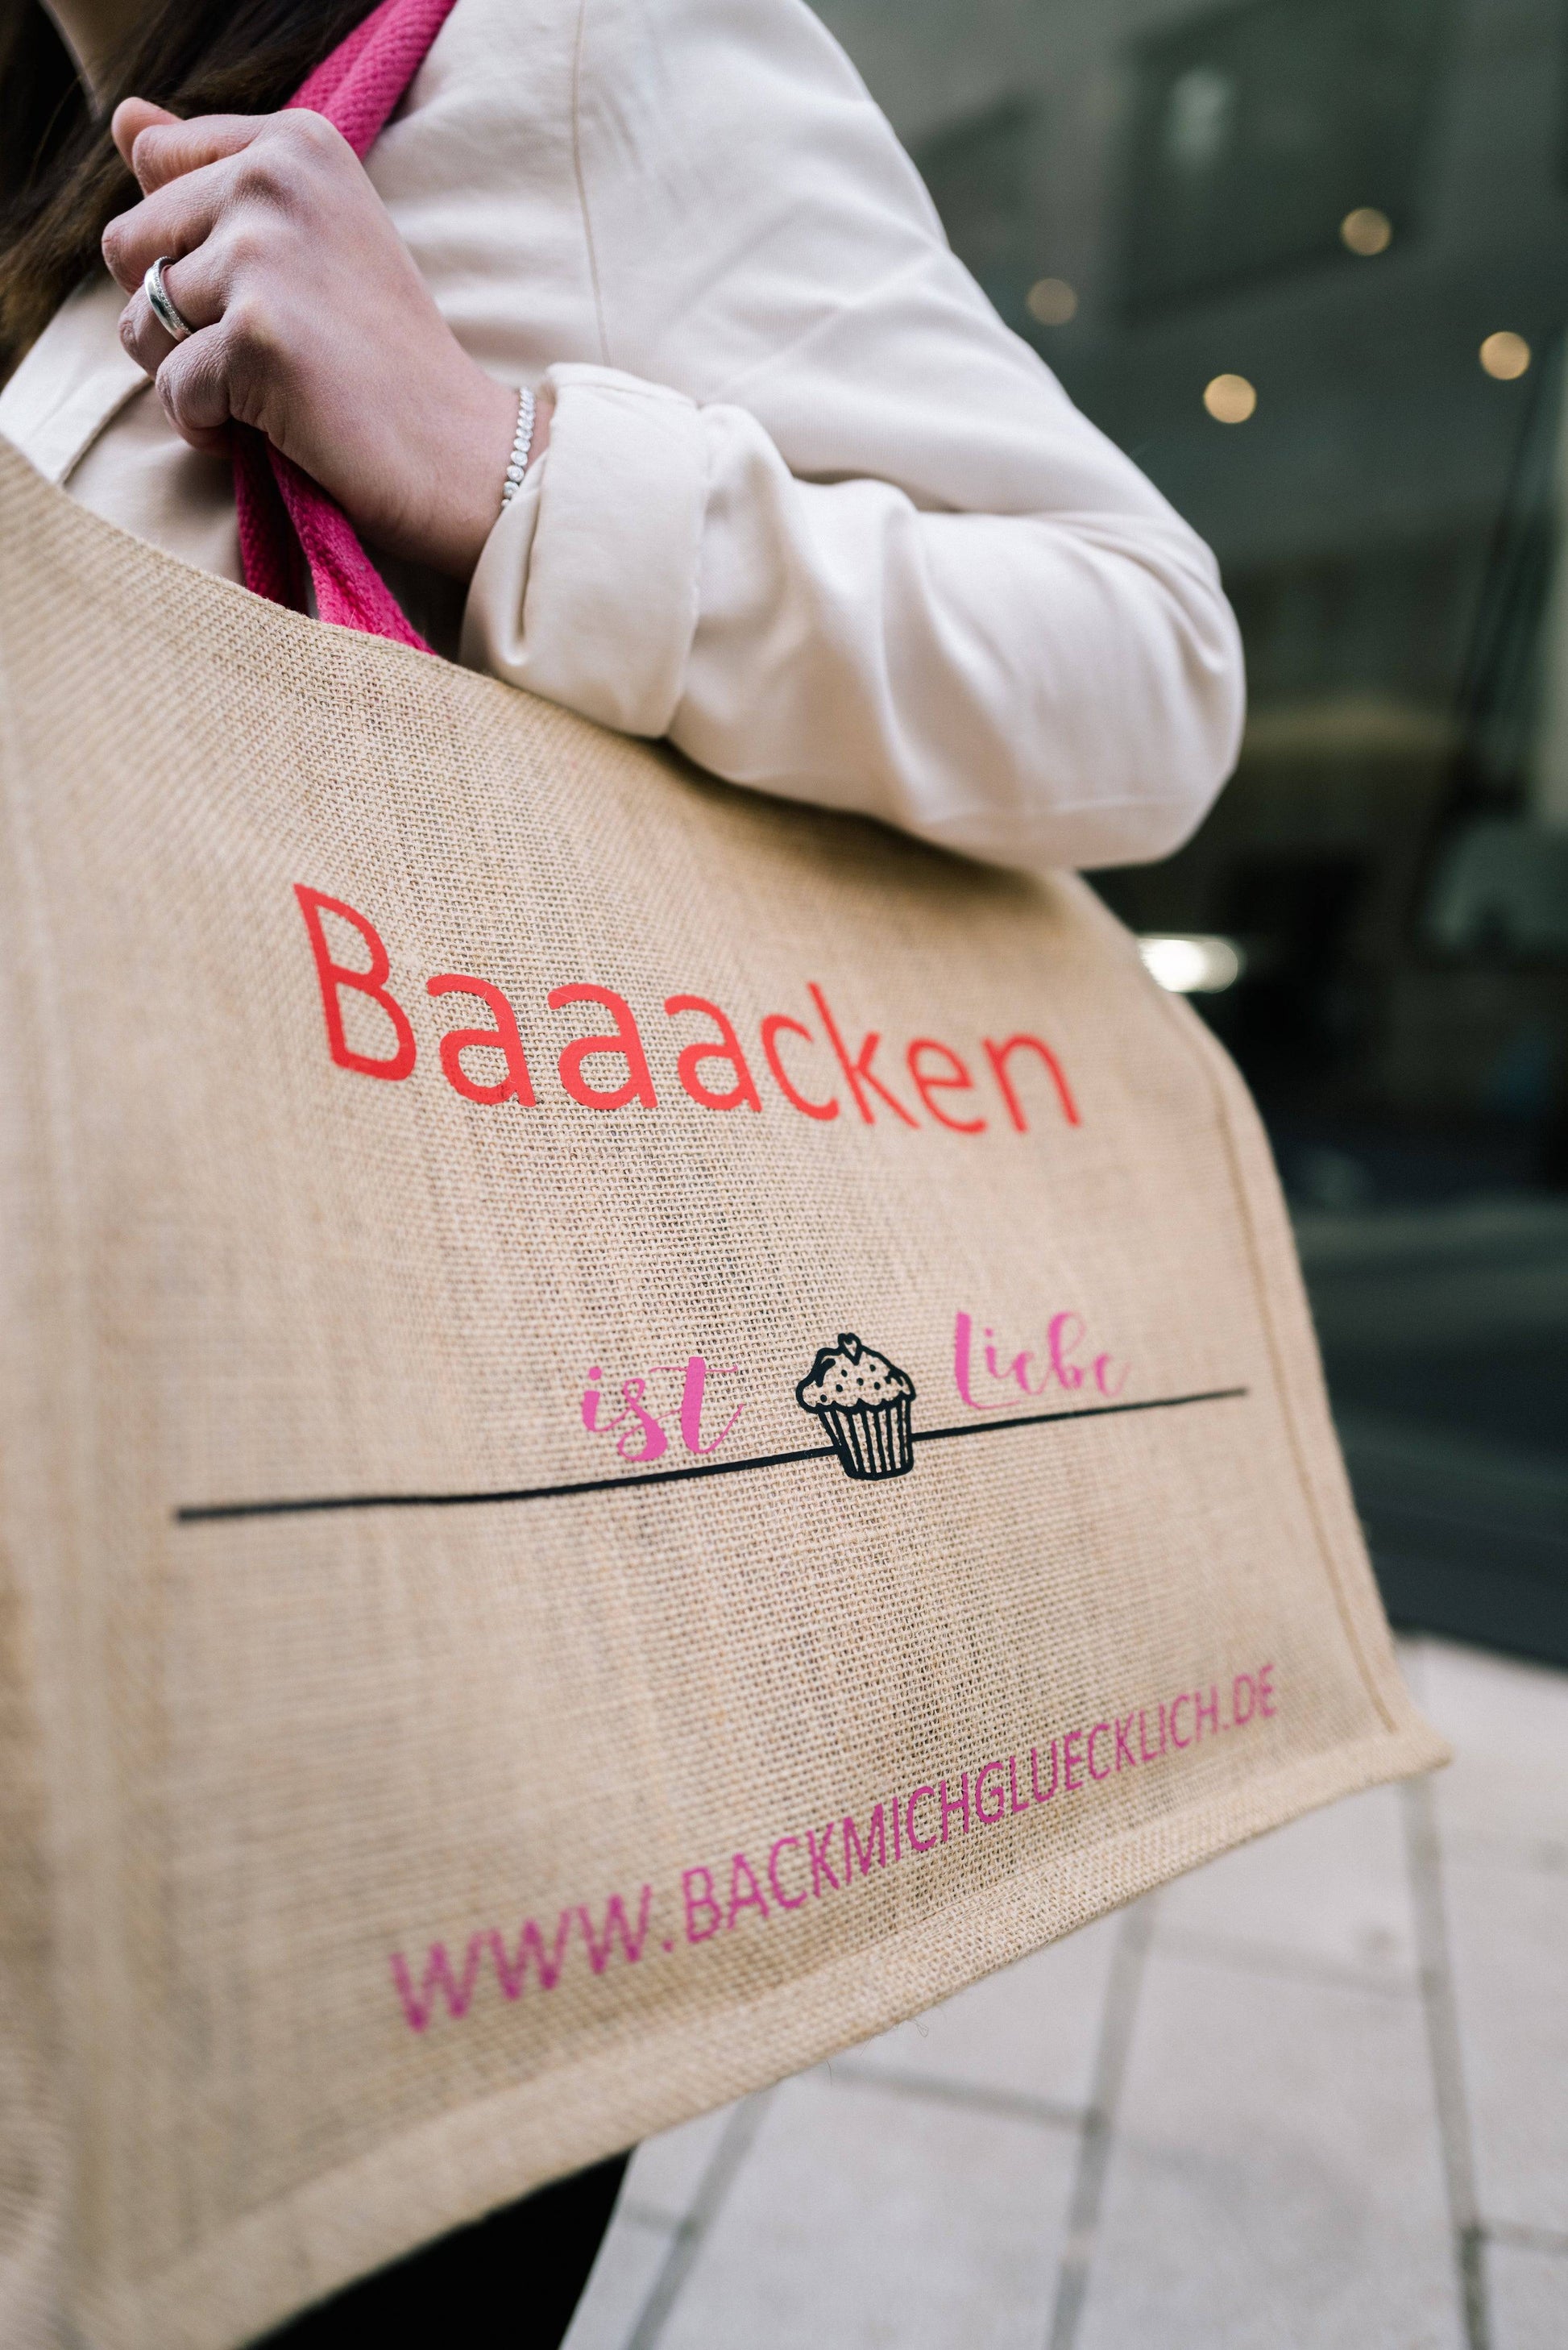 Charity Bag Handmade Baaacken ist Liebe by Backmichgluecklich - Der Backmichgluecklich Online Shop